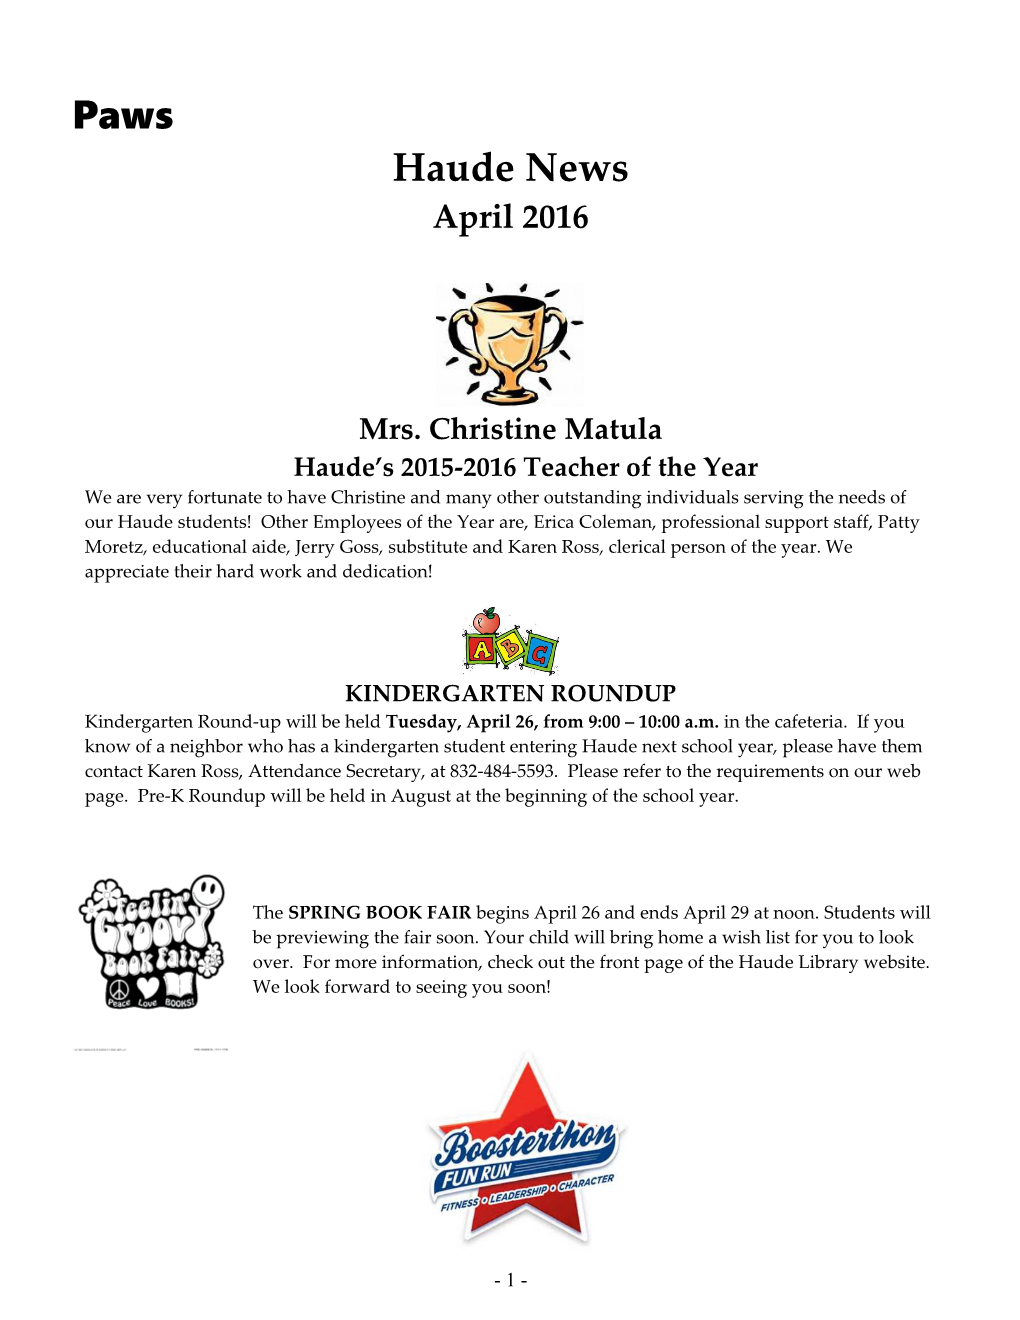 Haude S 2015-2016 Teacher of the Year